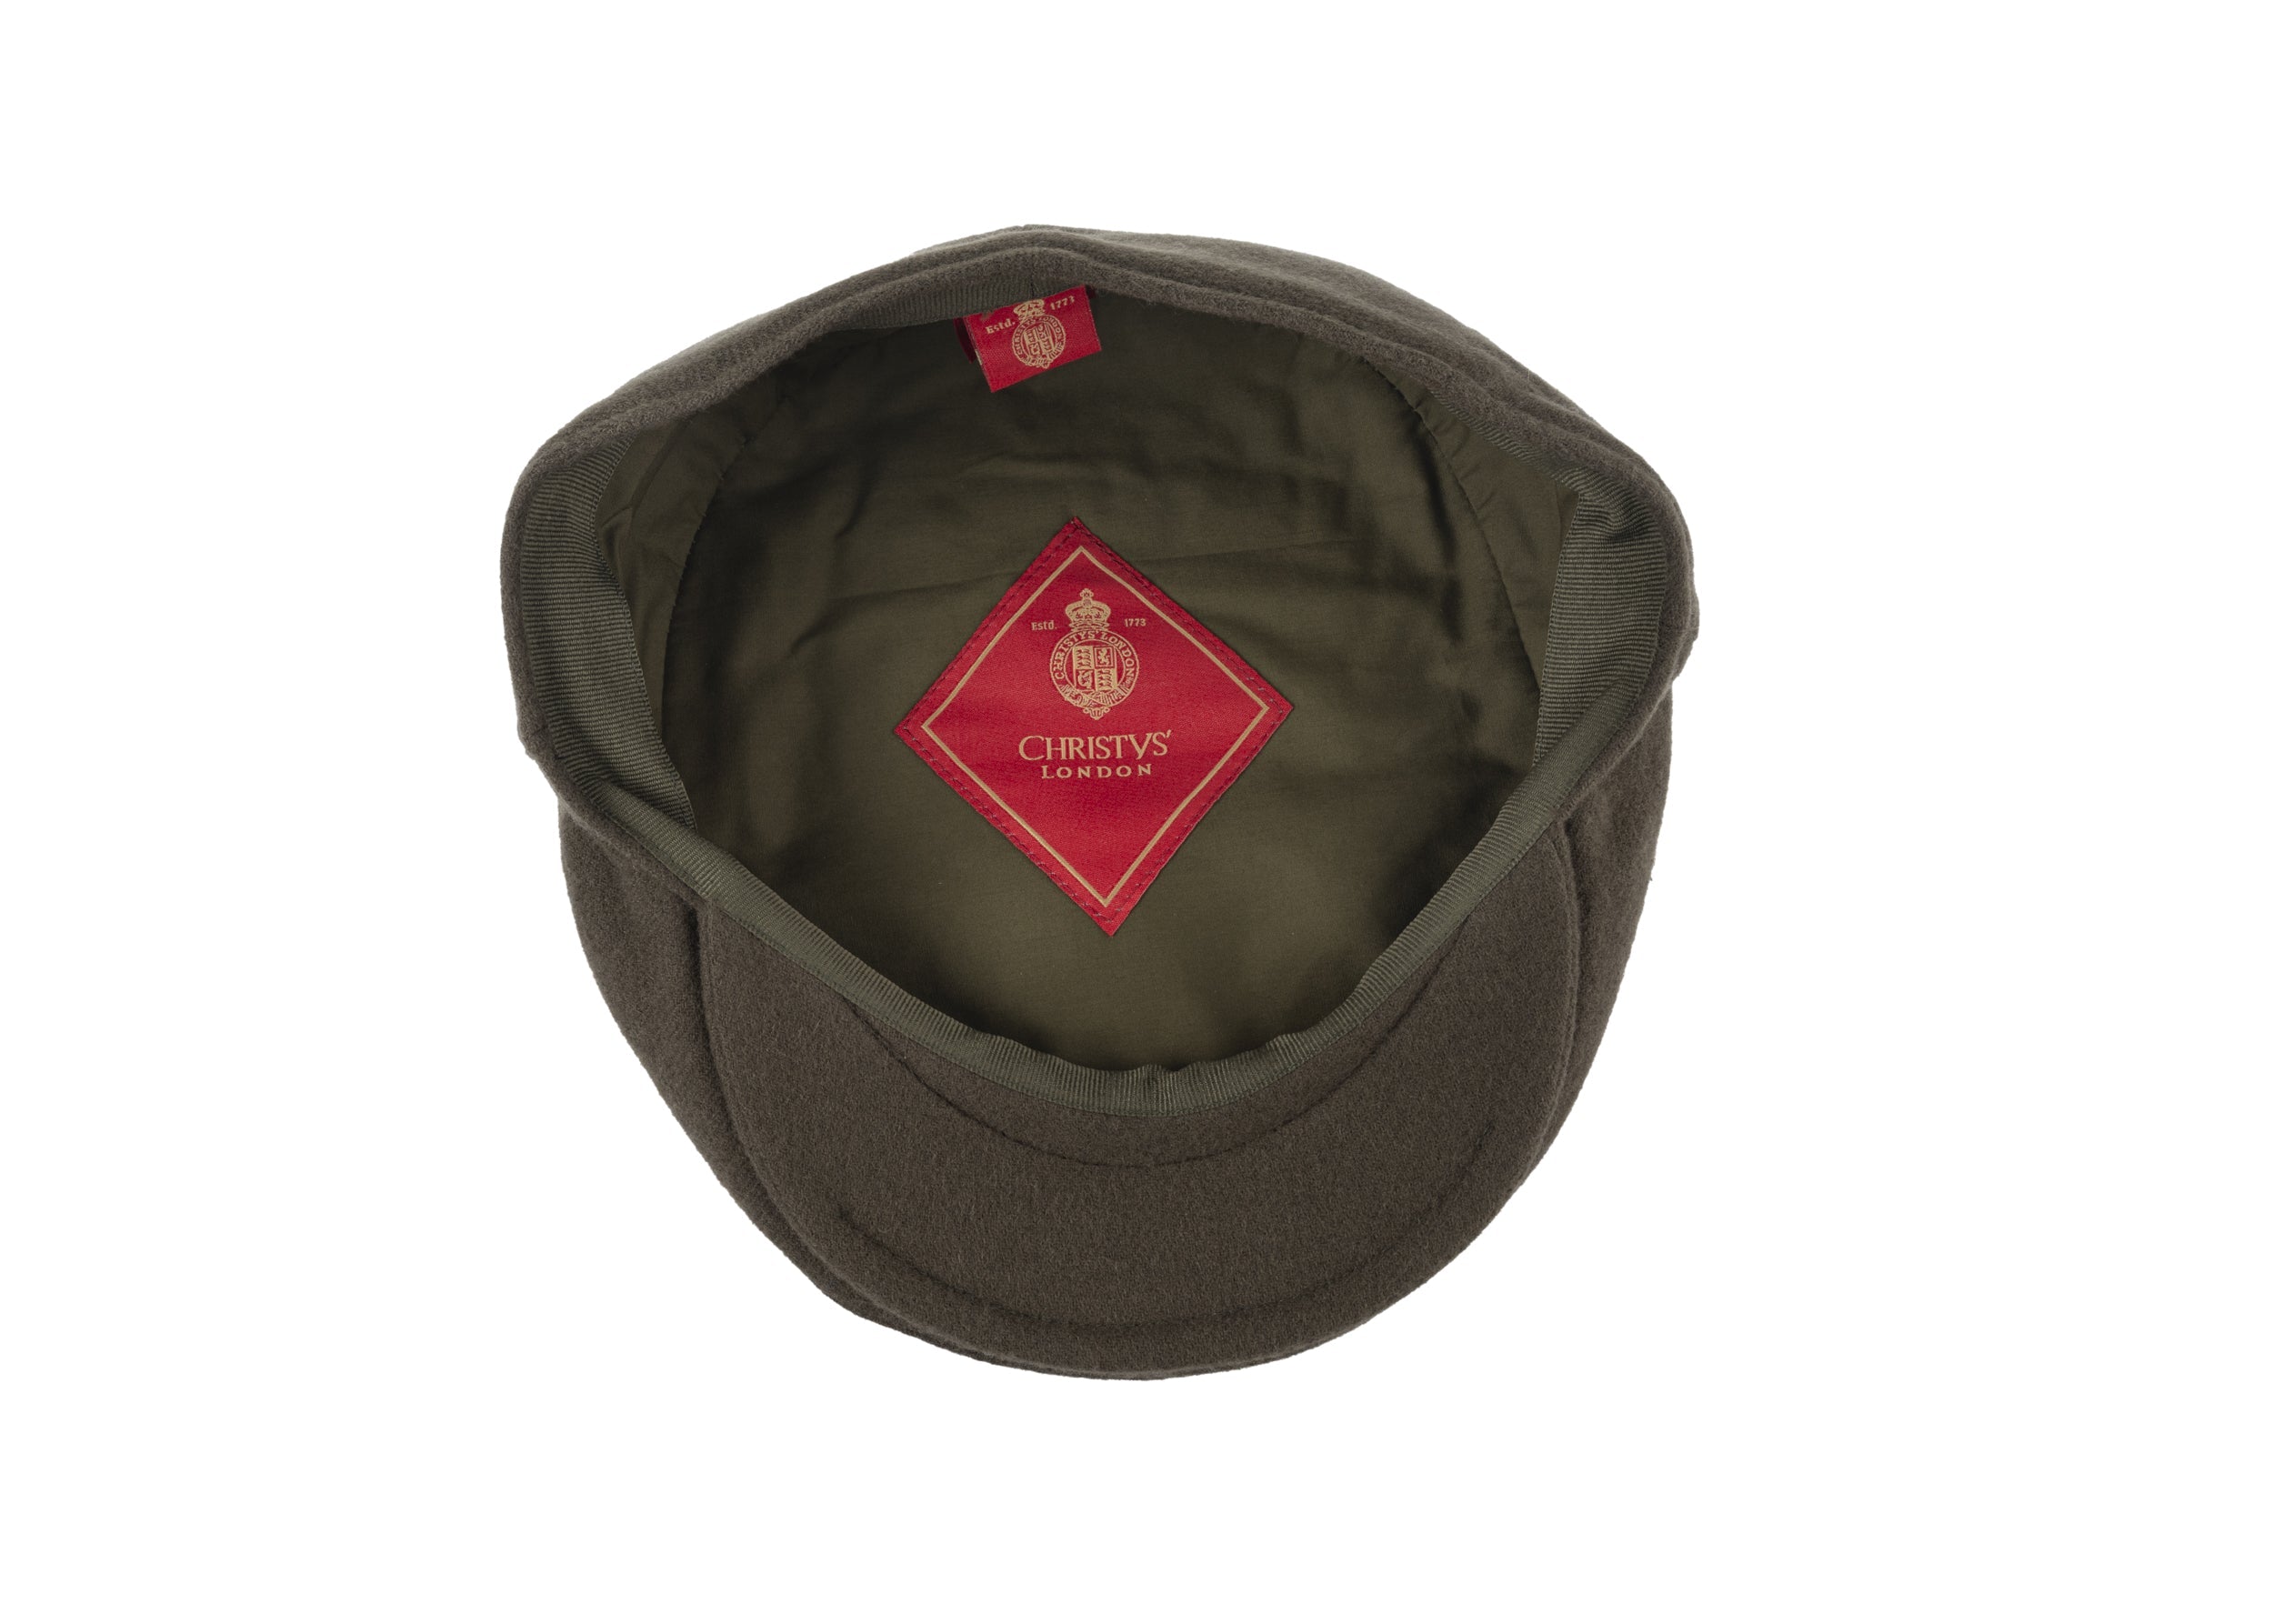 Josh balmoral flat cap in cashmere/wool blend fabric in Light Brown